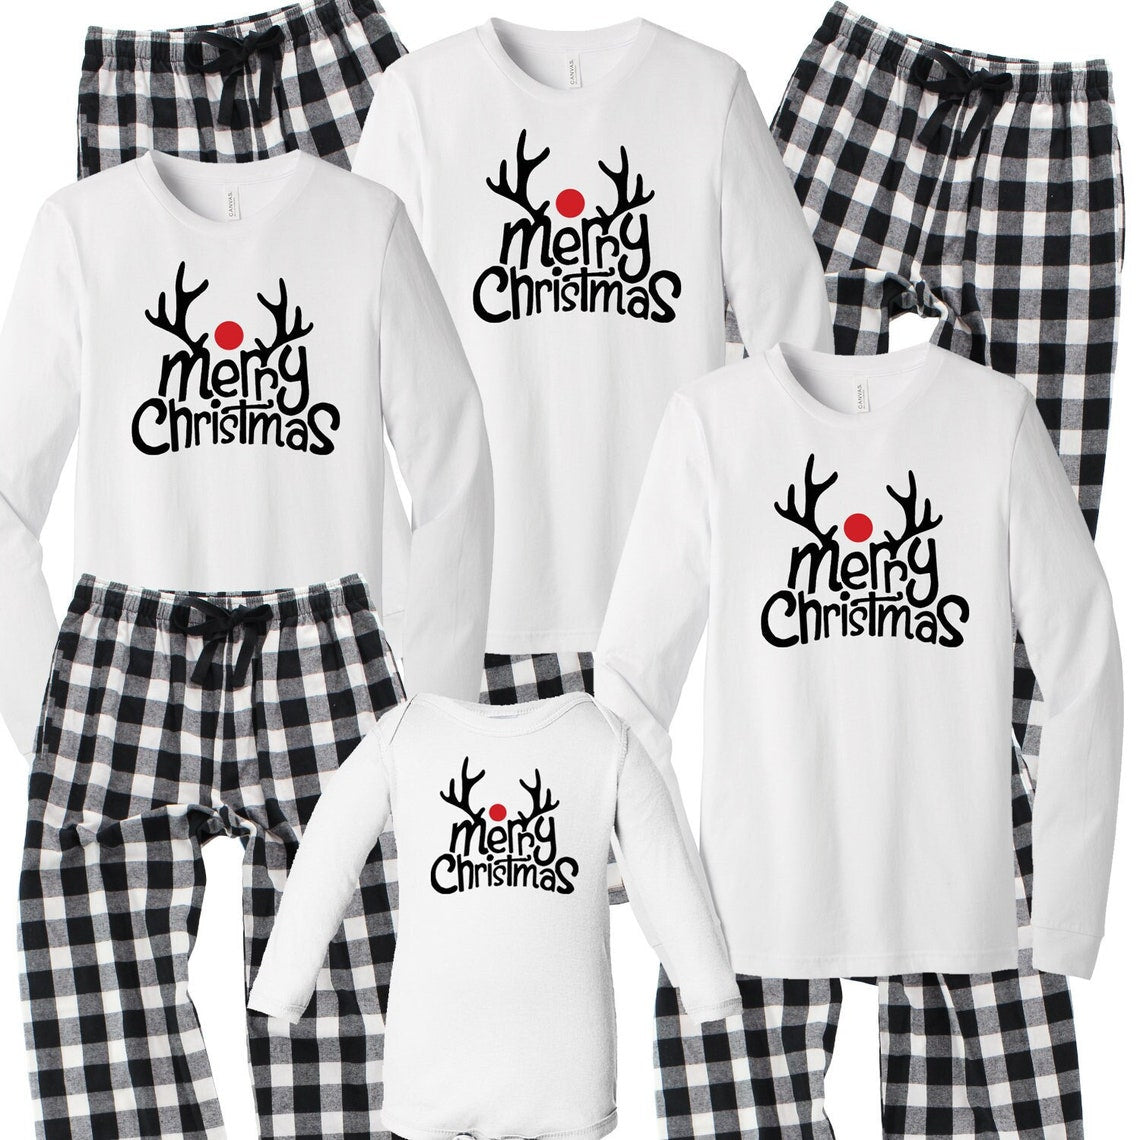 Full Set Matching Christmas Pajama Set Plaid Cotton PJ Pants -  Norway